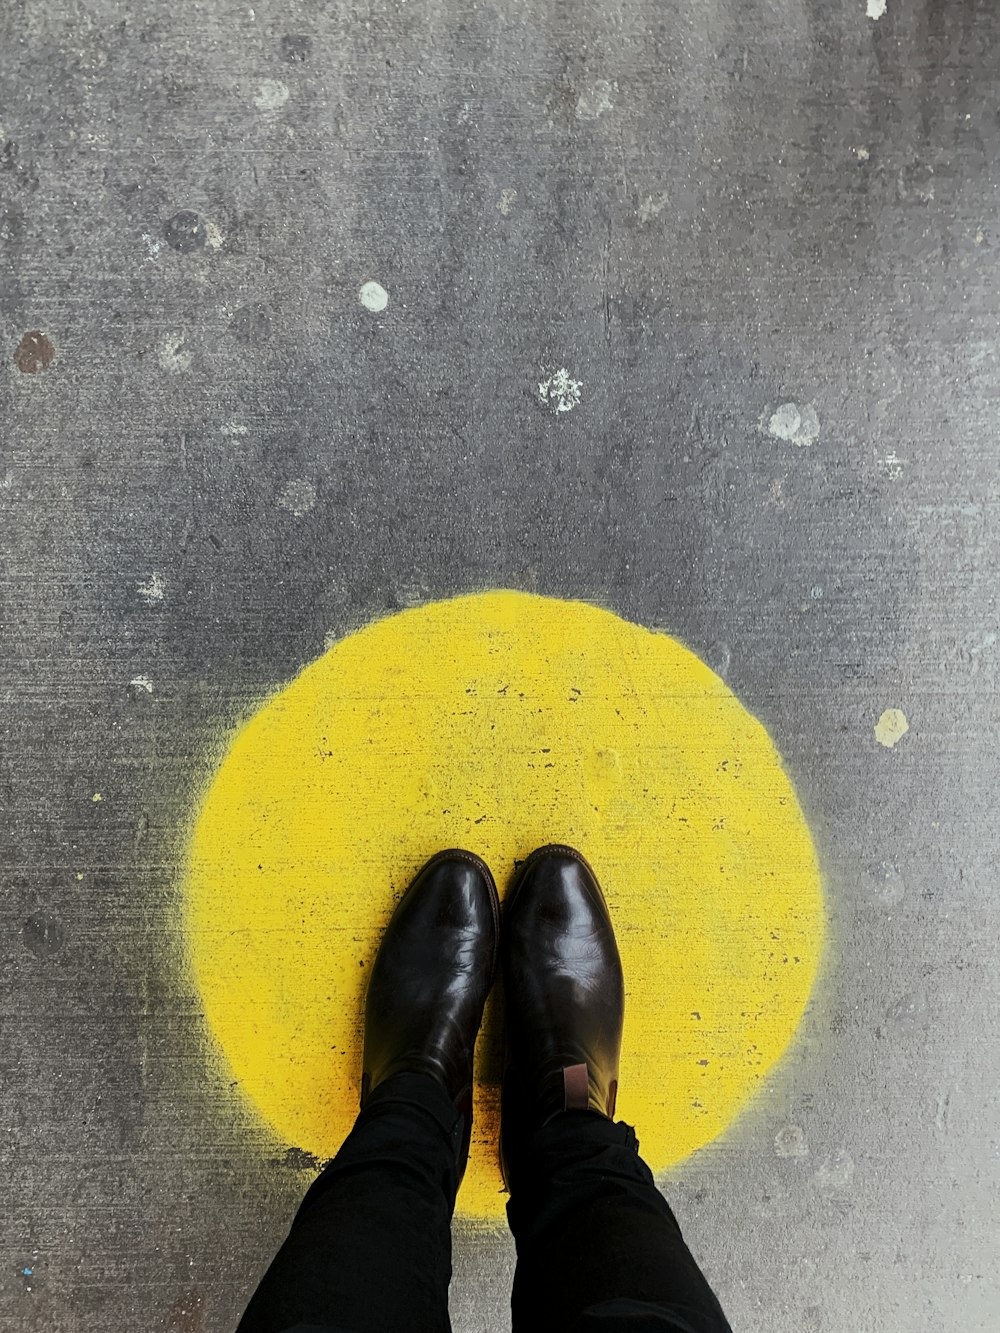 Persona in piedi su una superficie dipinta gialla rotonda